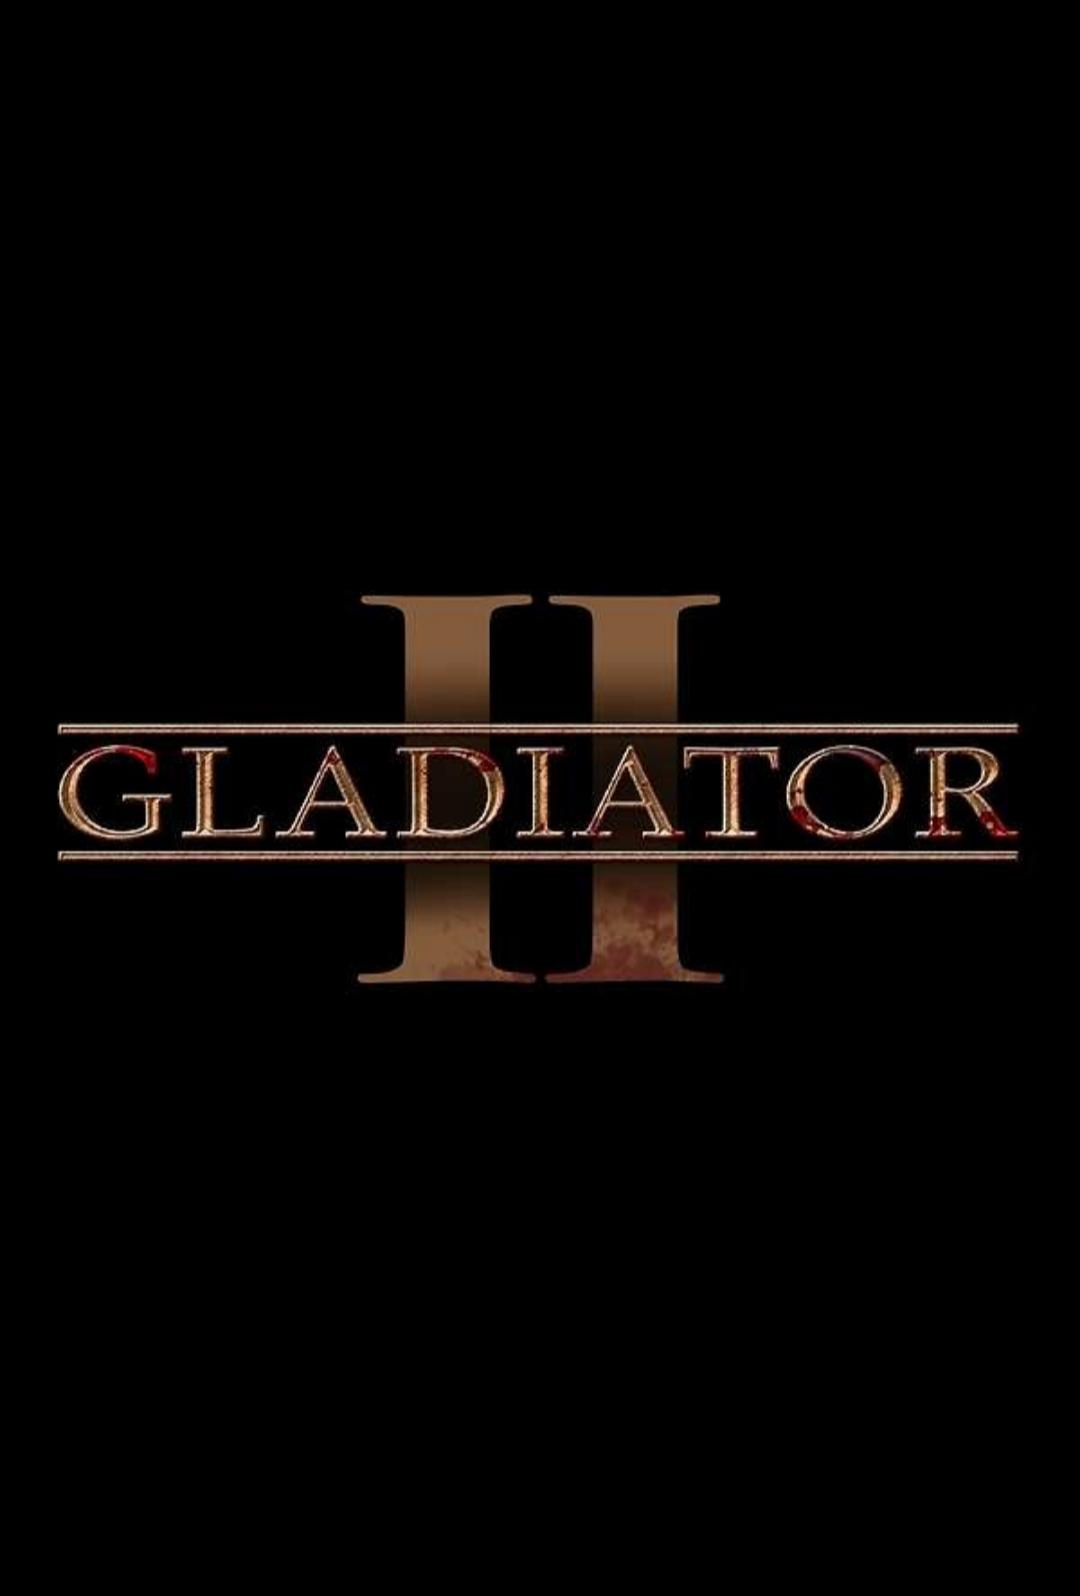 arnon reisman recommends Gladiator Movie Free Online